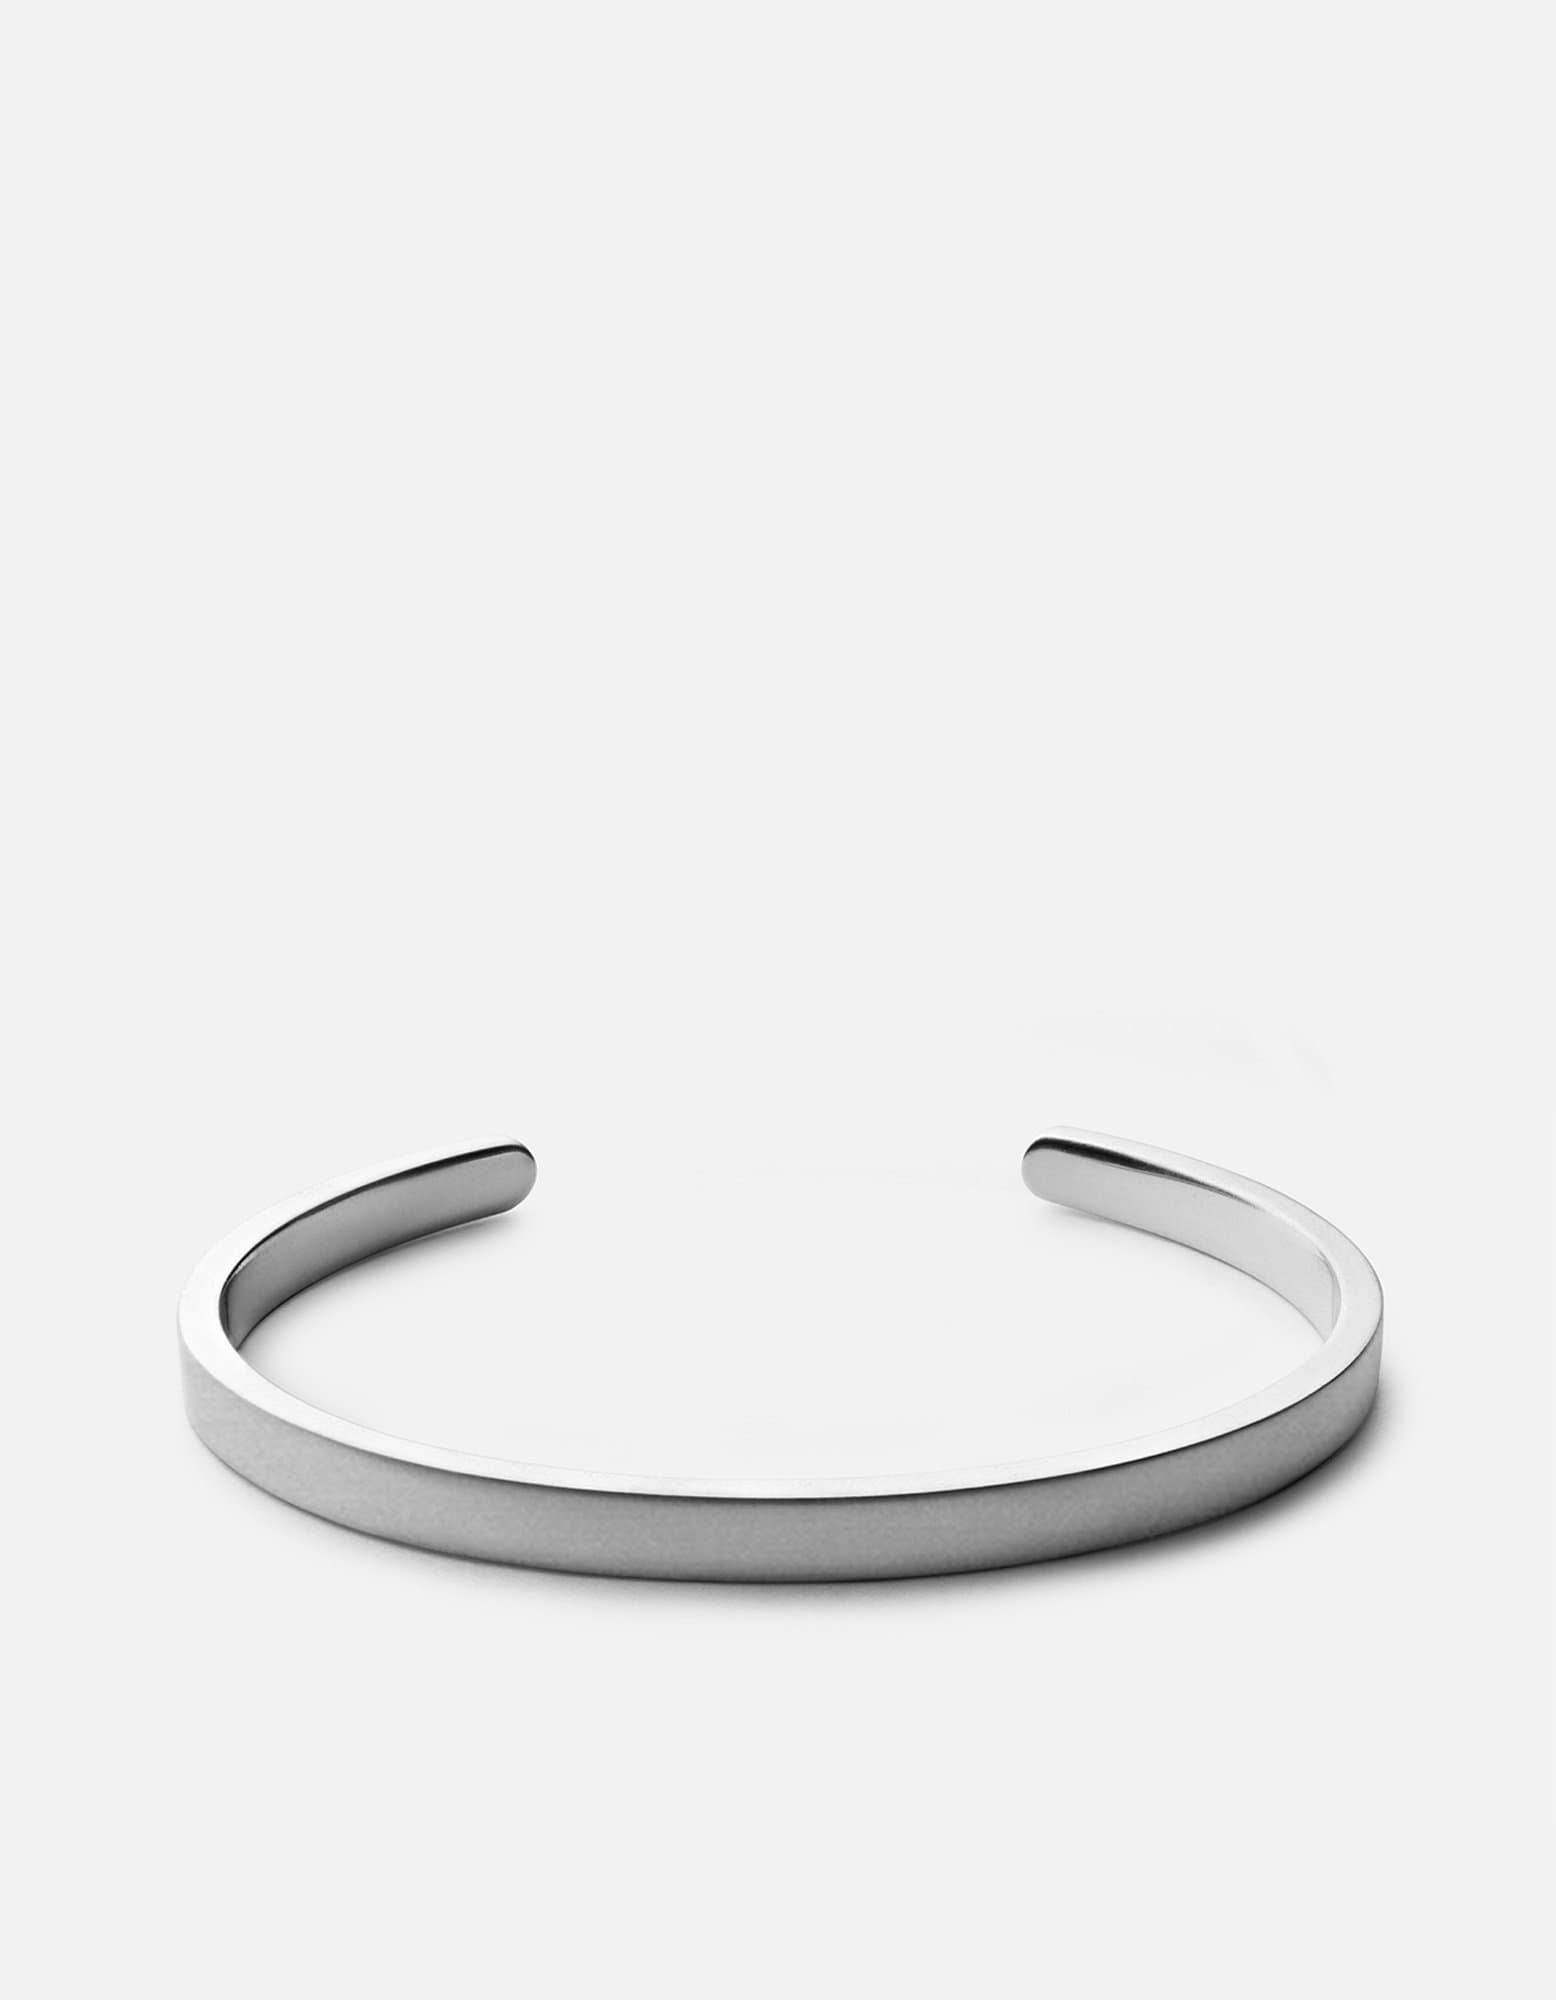 silver cuff bracelet